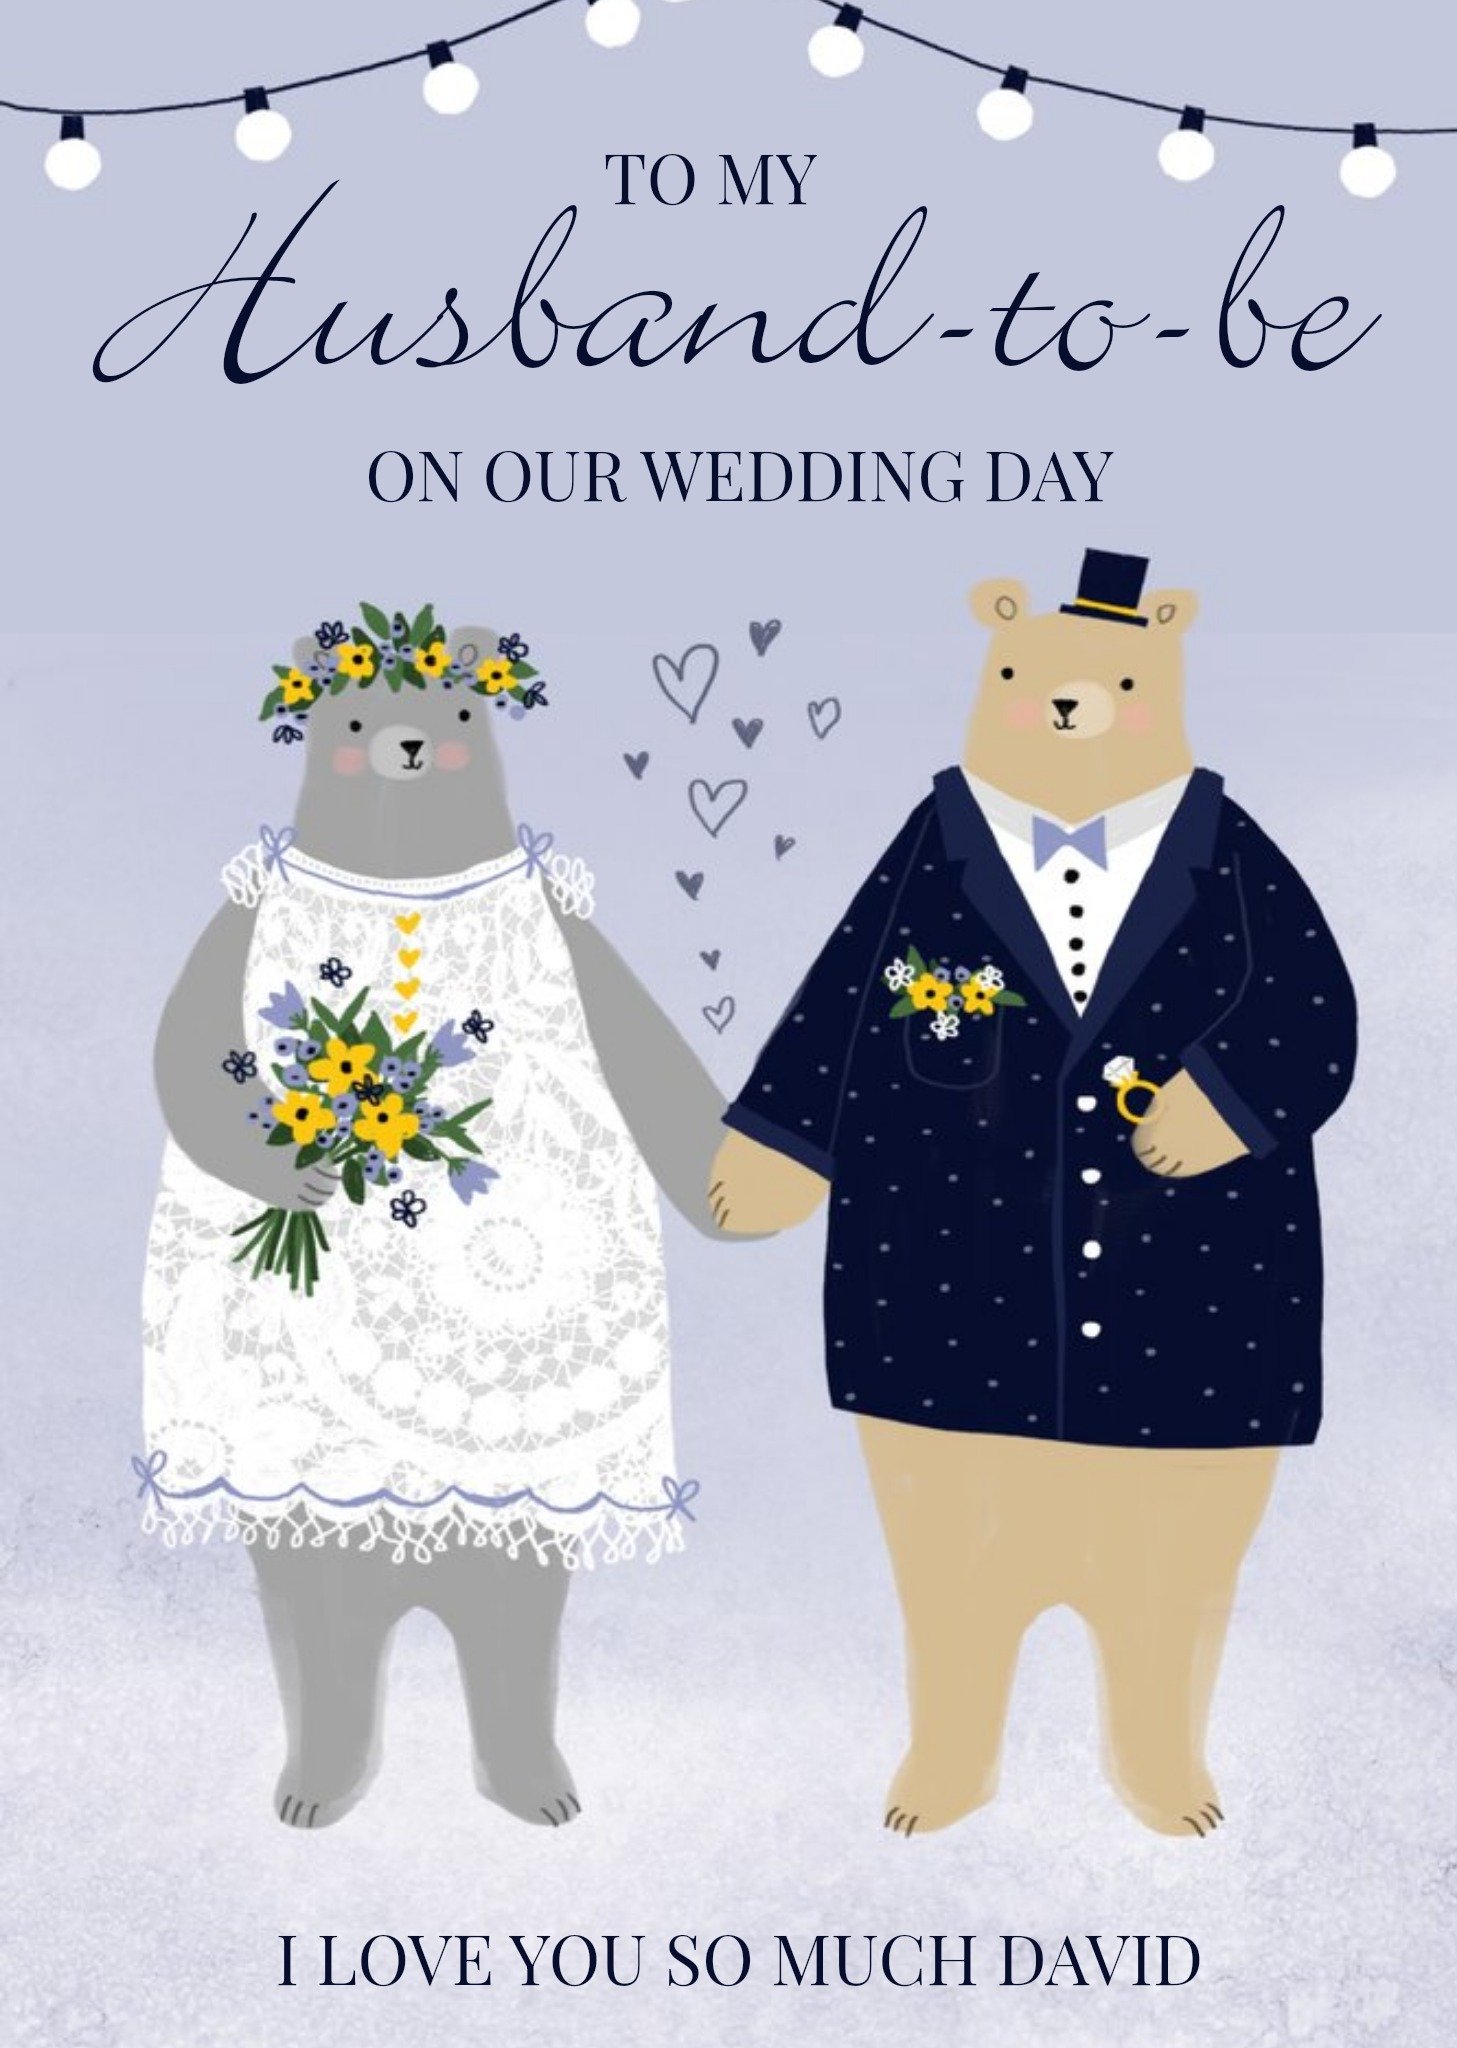 Okey Dokey Design Illustration Of Two Bears Wearing Wedding Outfits Husband To Be Wedding Card Ecard